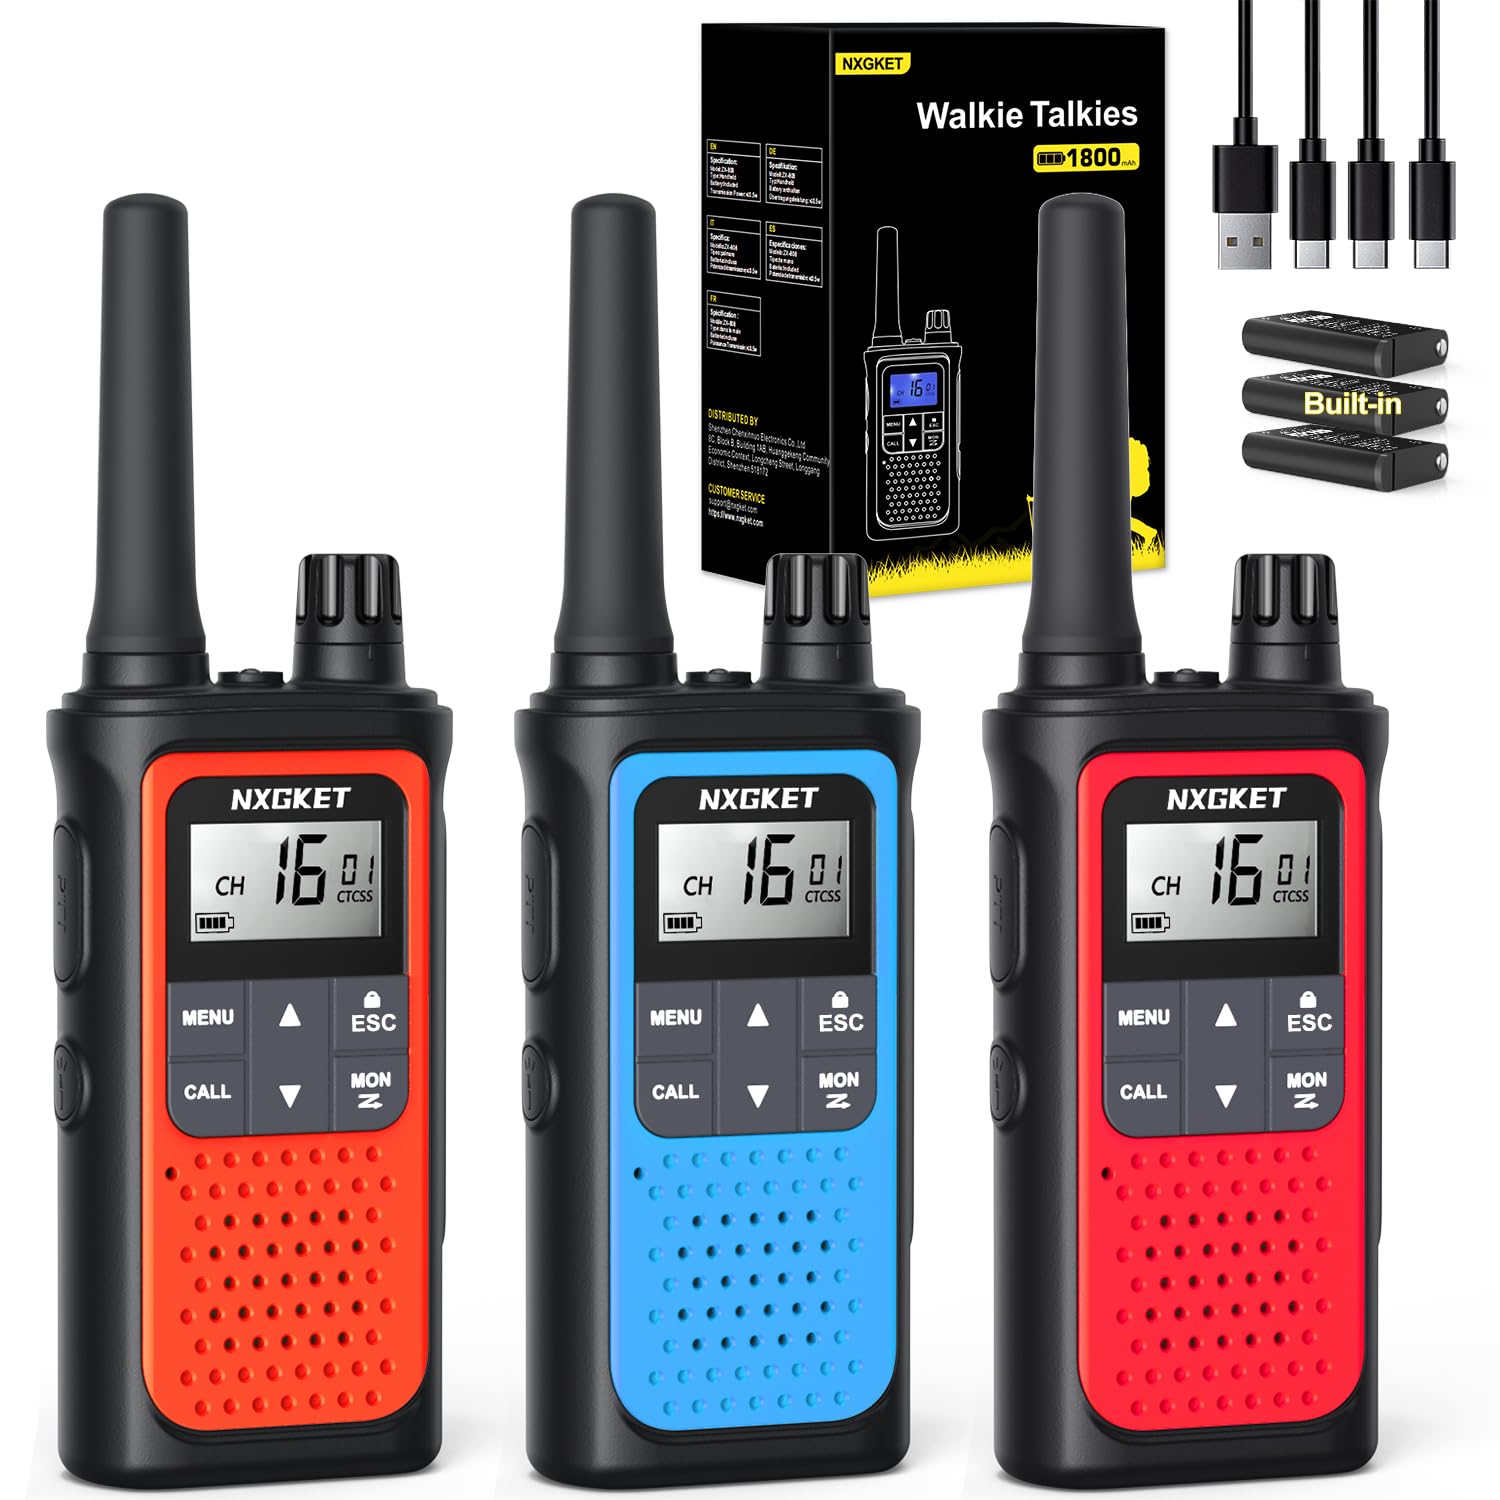 Radio communication devices or walkie-talkies.